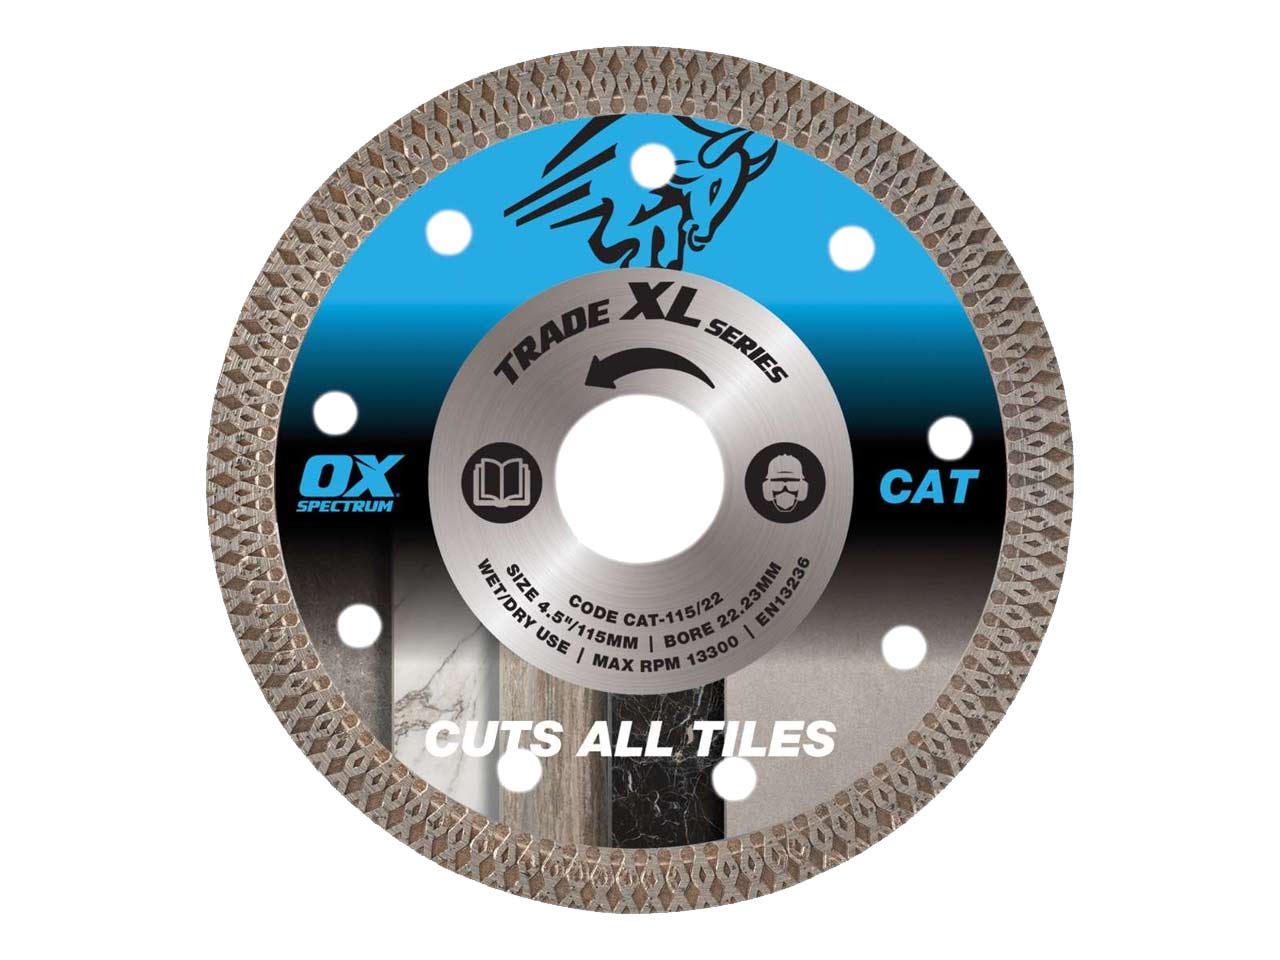 OX Trade XL - Cuts All Tiles Diamond Blade - 115/22.23mm